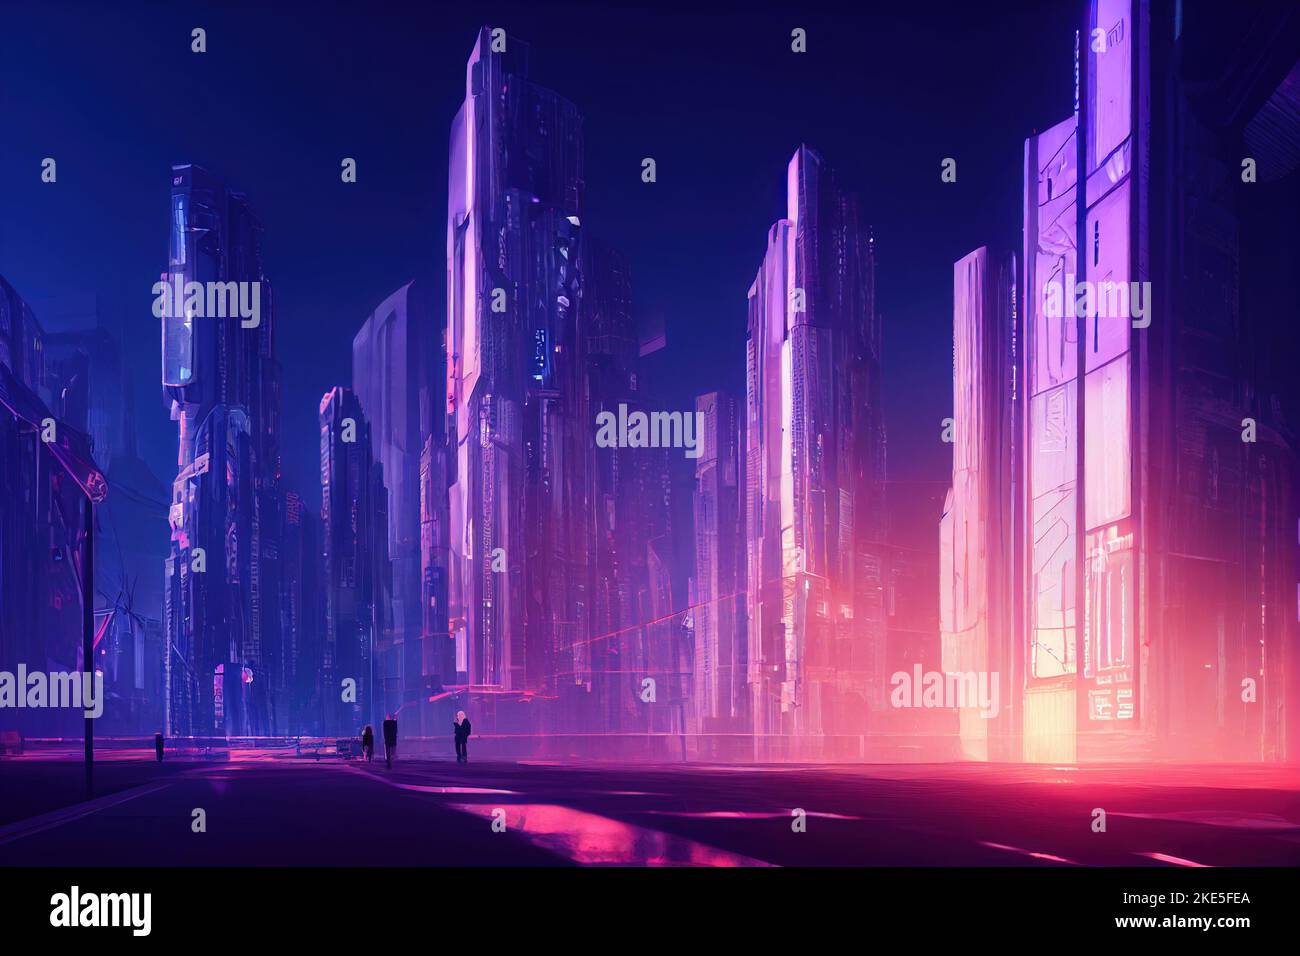 Cyberpunk city wallpaper dark